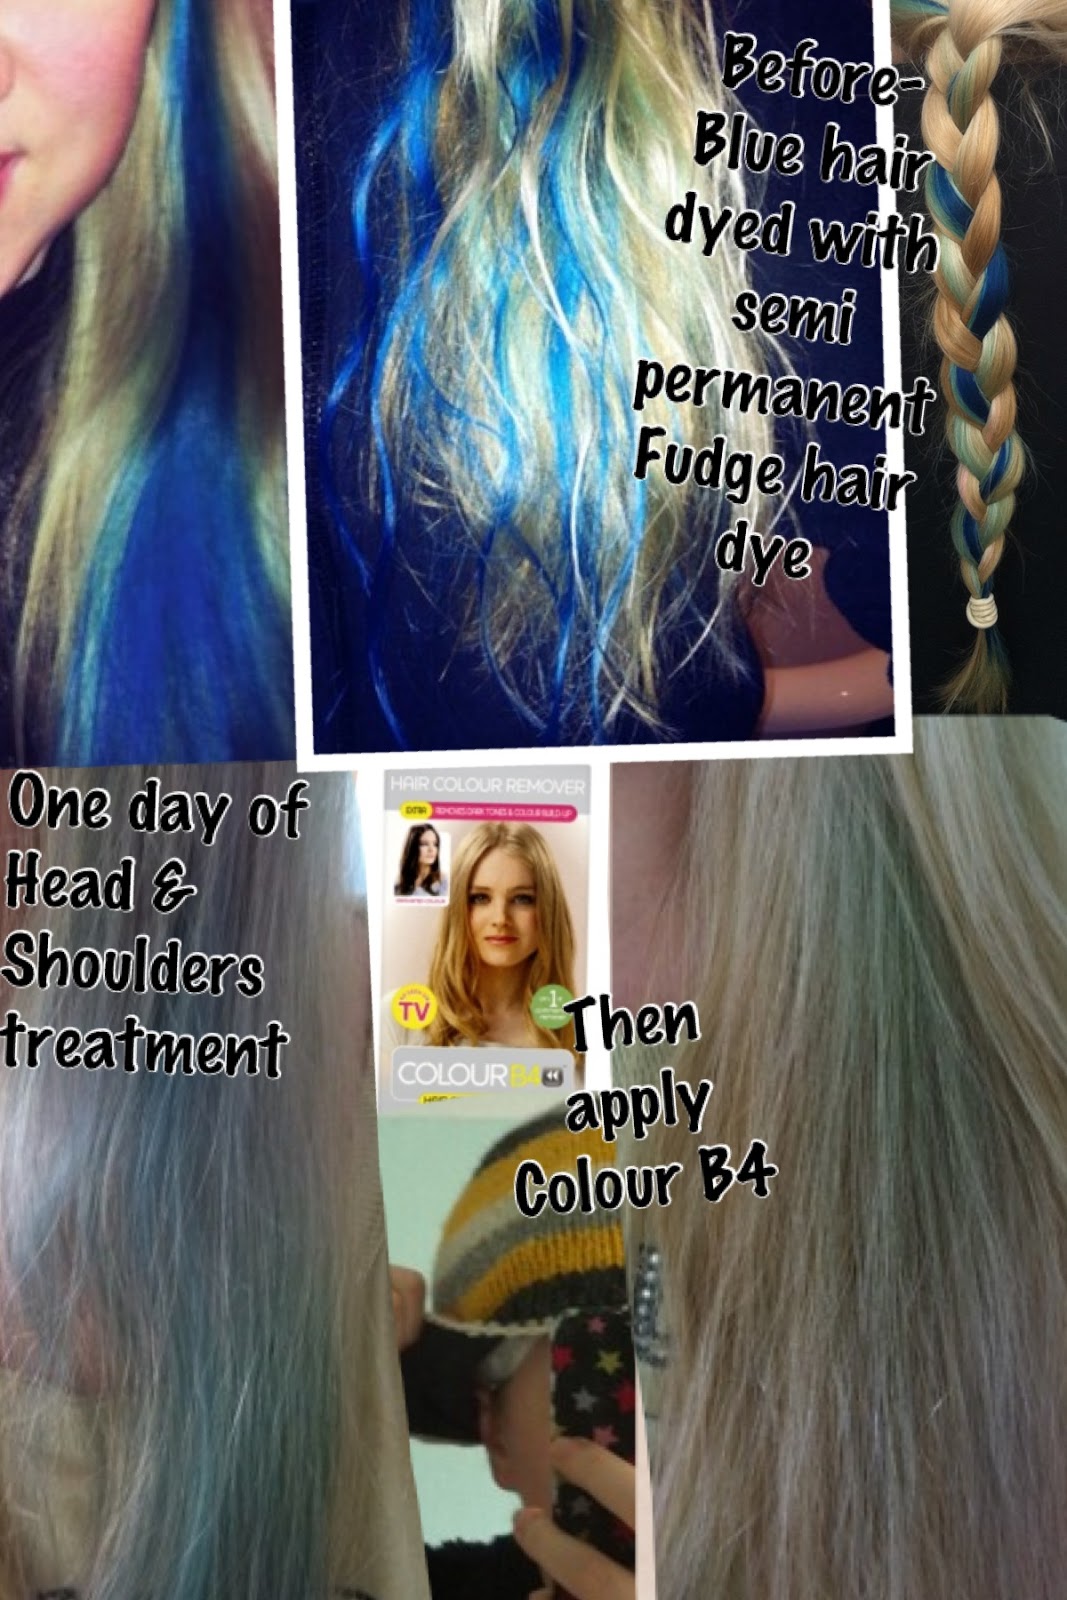 AmyInDevon Can You Remove Blue Hair Dye